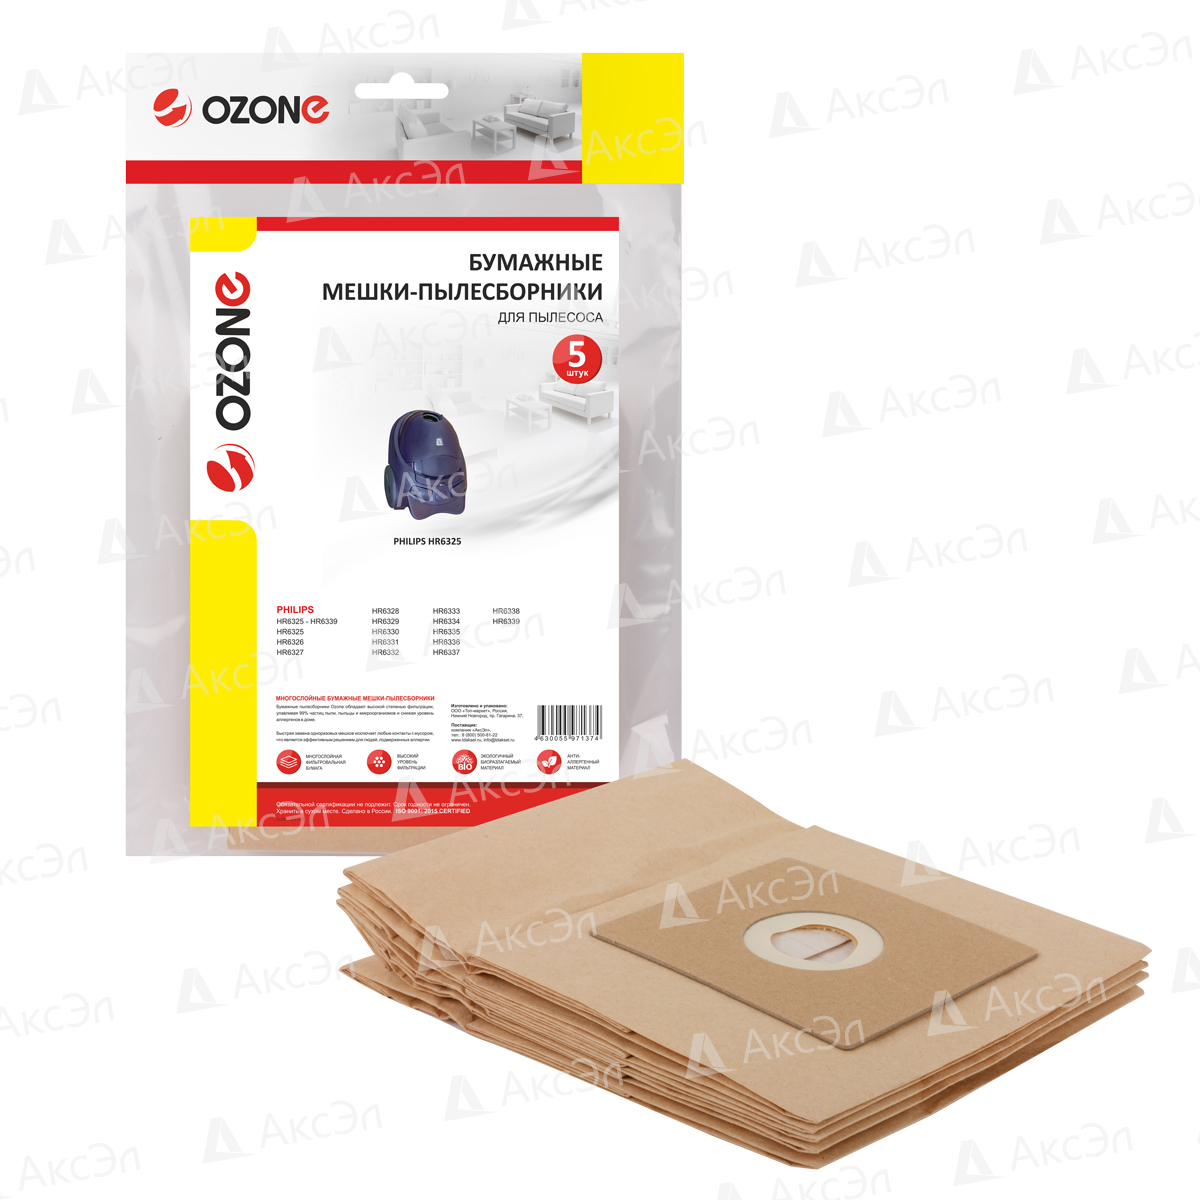 OZONE Paper Z-55 бумажные пылесборники 5 шт. (Philips тип оригинала HR6995)